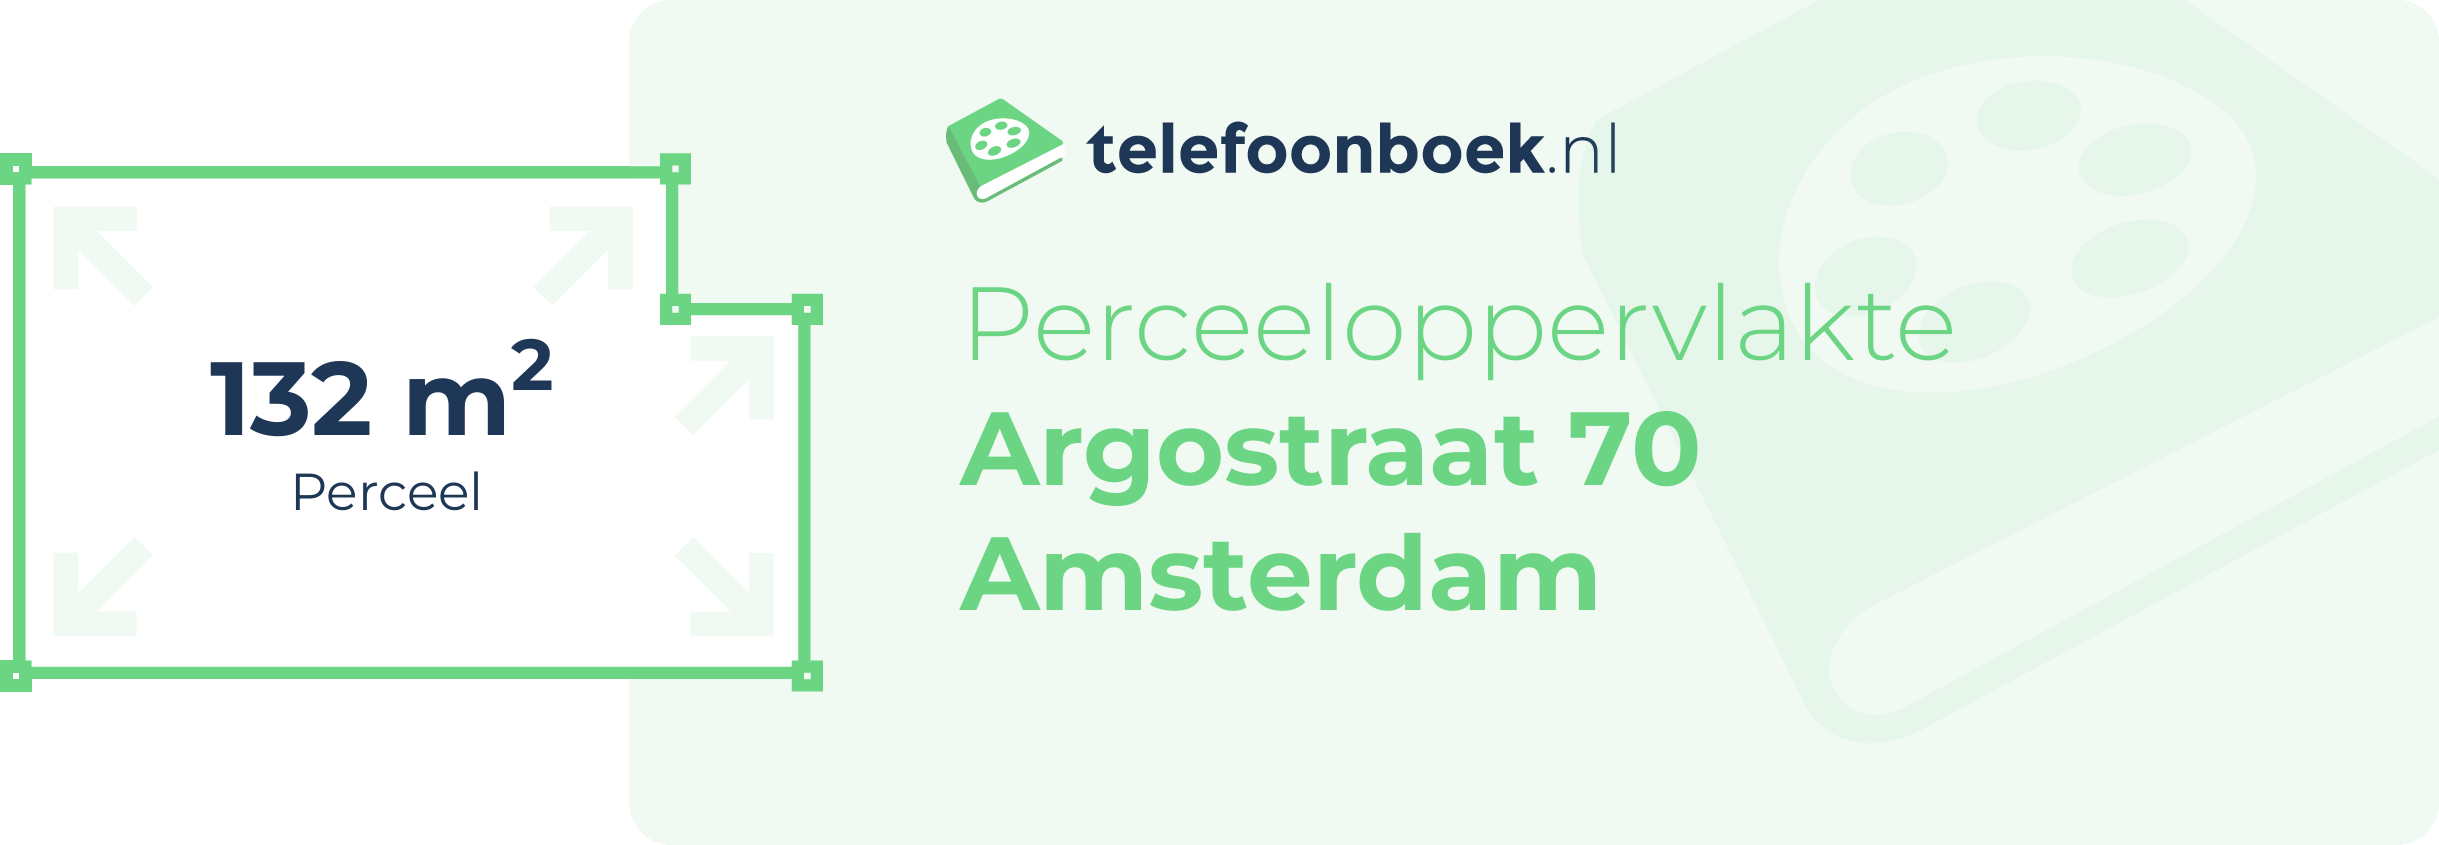 Perceeloppervlakte Argostraat 70 Amsterdam